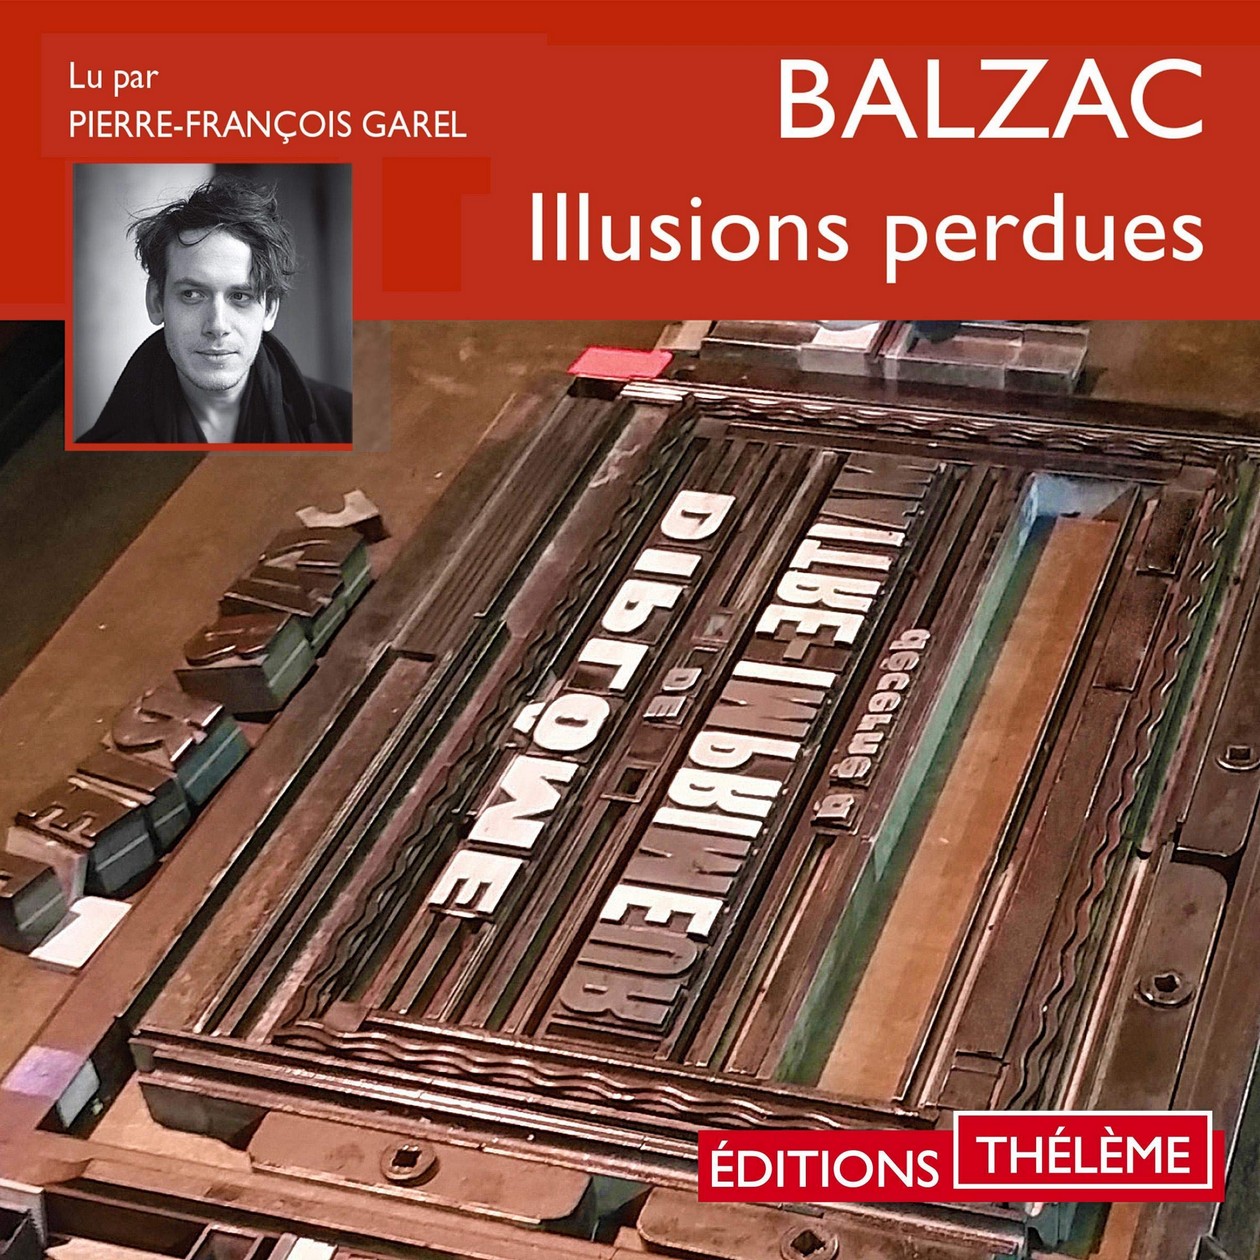 Audiobook / Livre audio : Balzac, Illusions perdues. Lu par Pierre-François Garel (23h29)